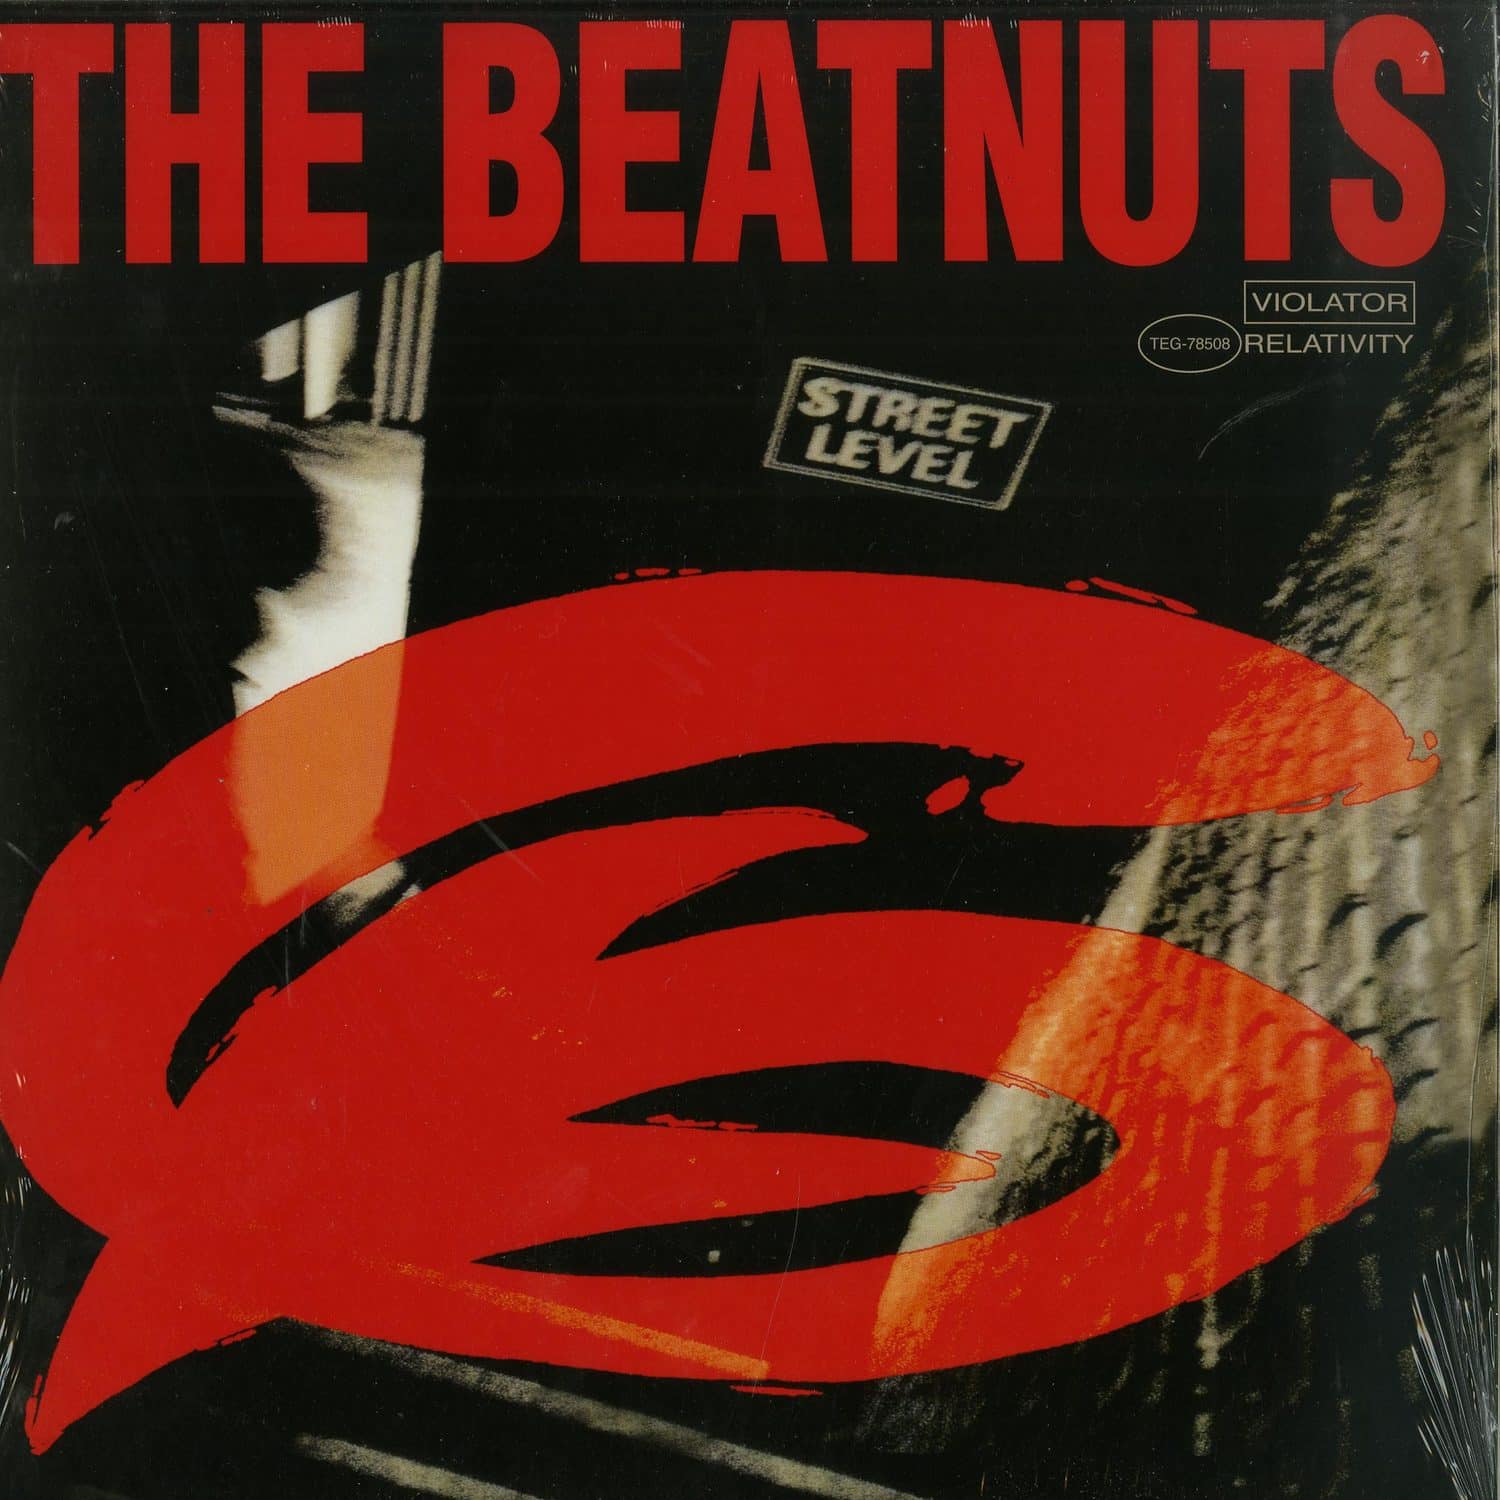 The Beatnuts - THE BEATNUTS 